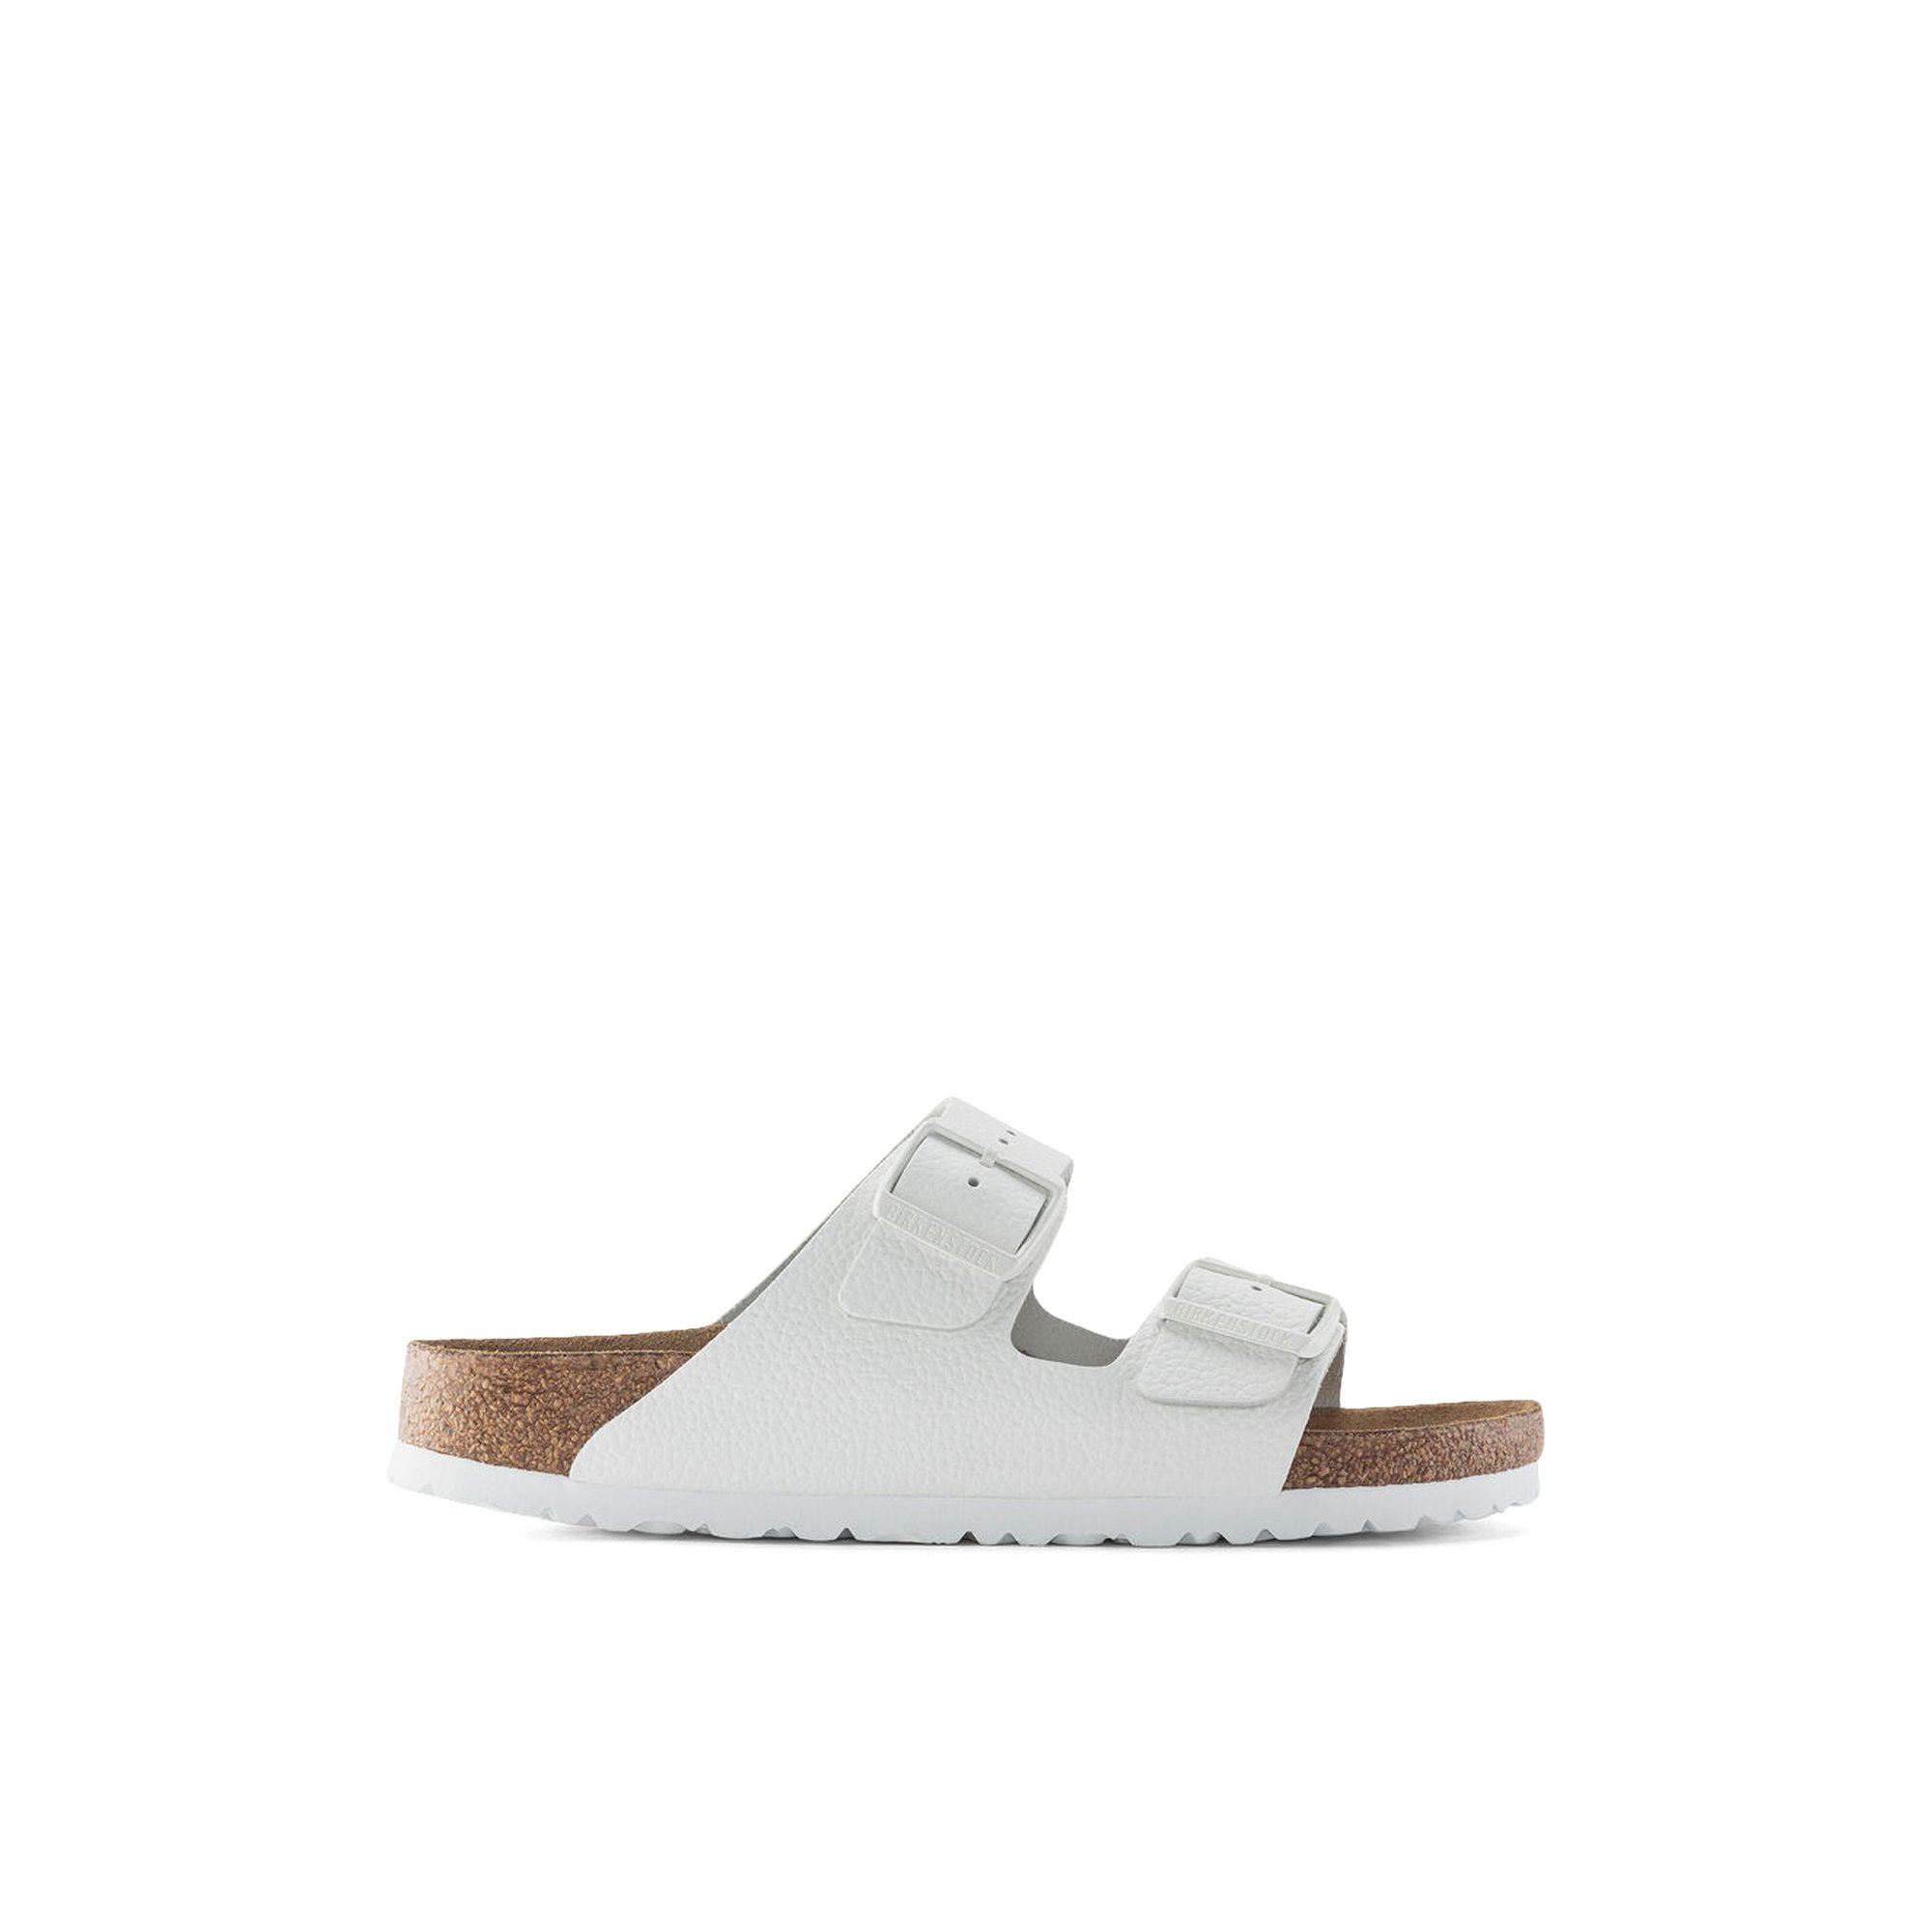 Birkenstock Arizona Soft - Women's Footwear Sandals Footbed White